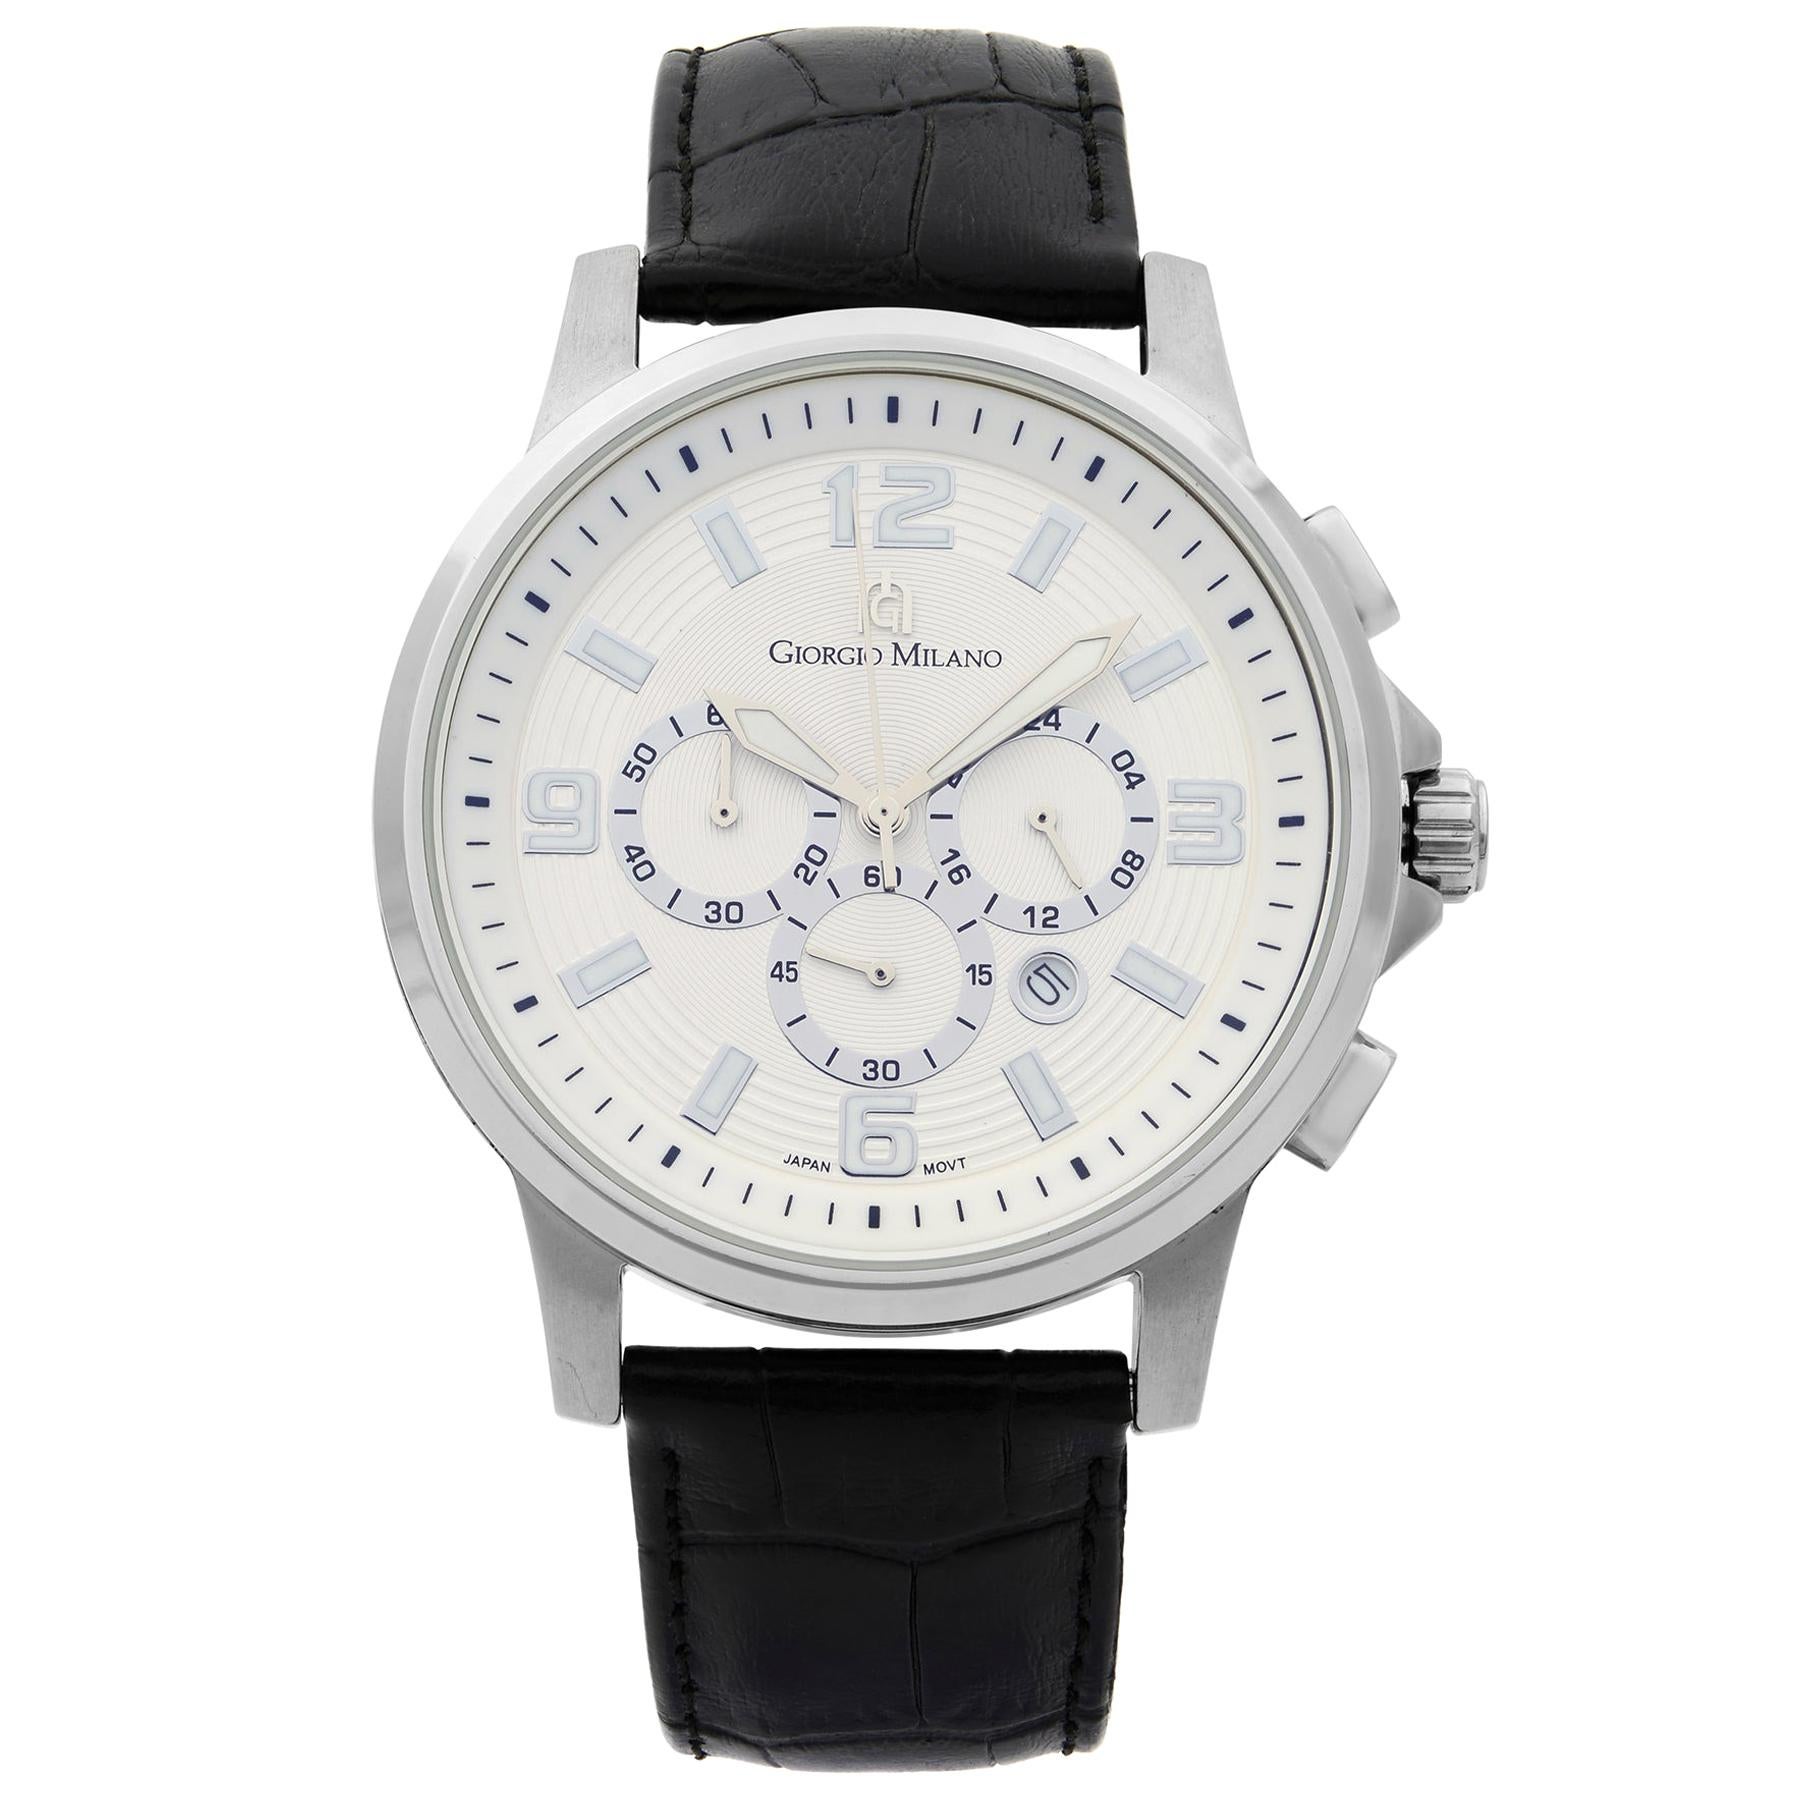 Giorgio Milano Stainless Steel Chronograph Quartz Men's Watch 885ST022